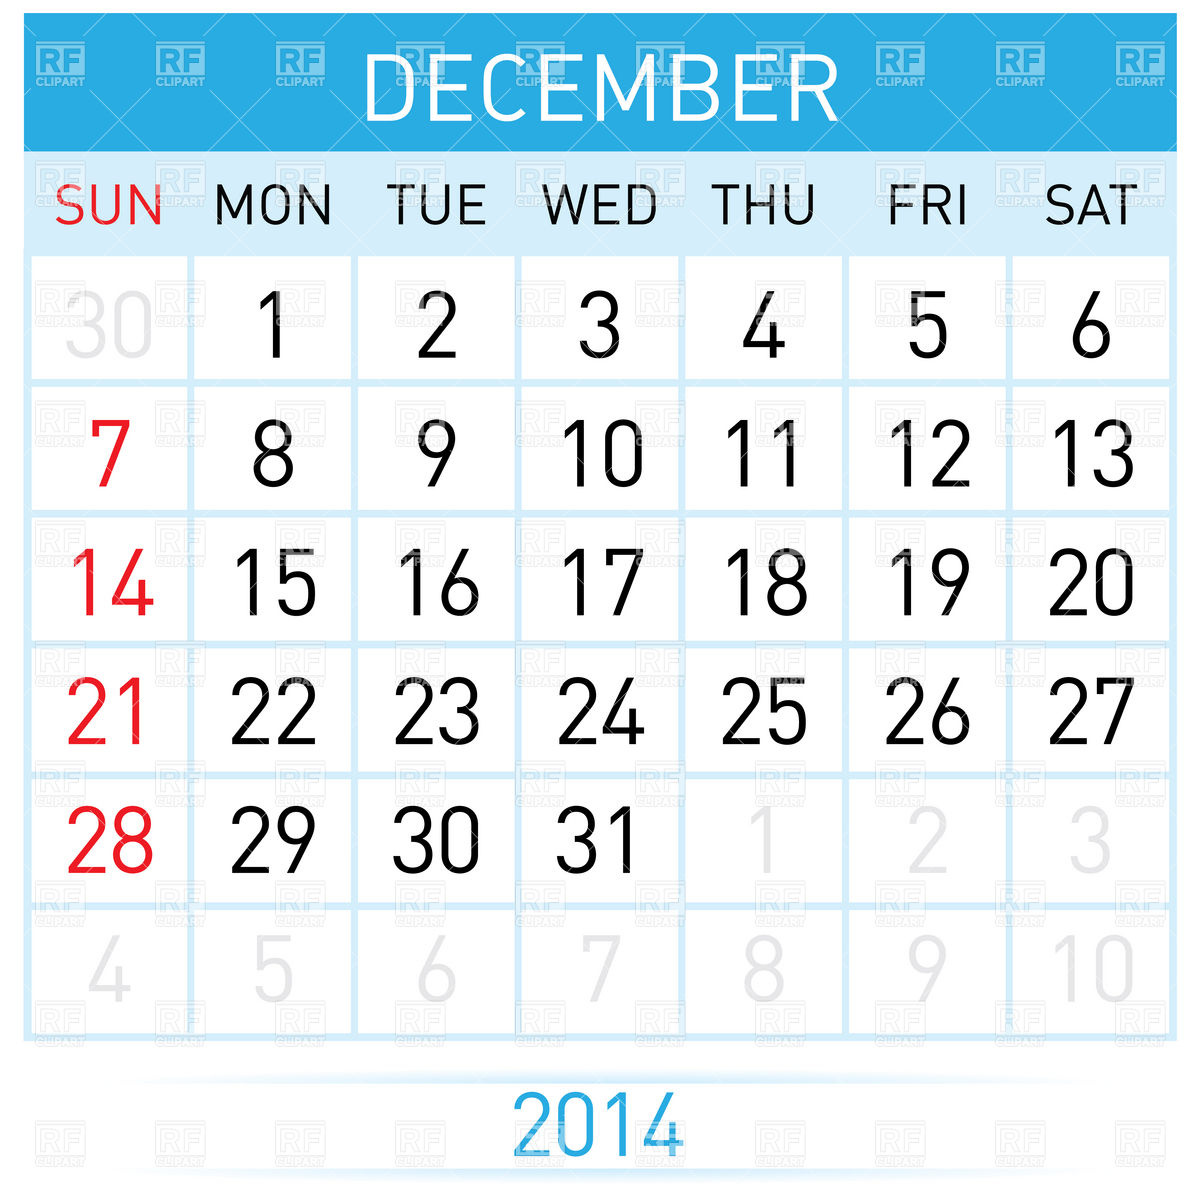 free-december-calendar-cliparts-download-free-december-calendar